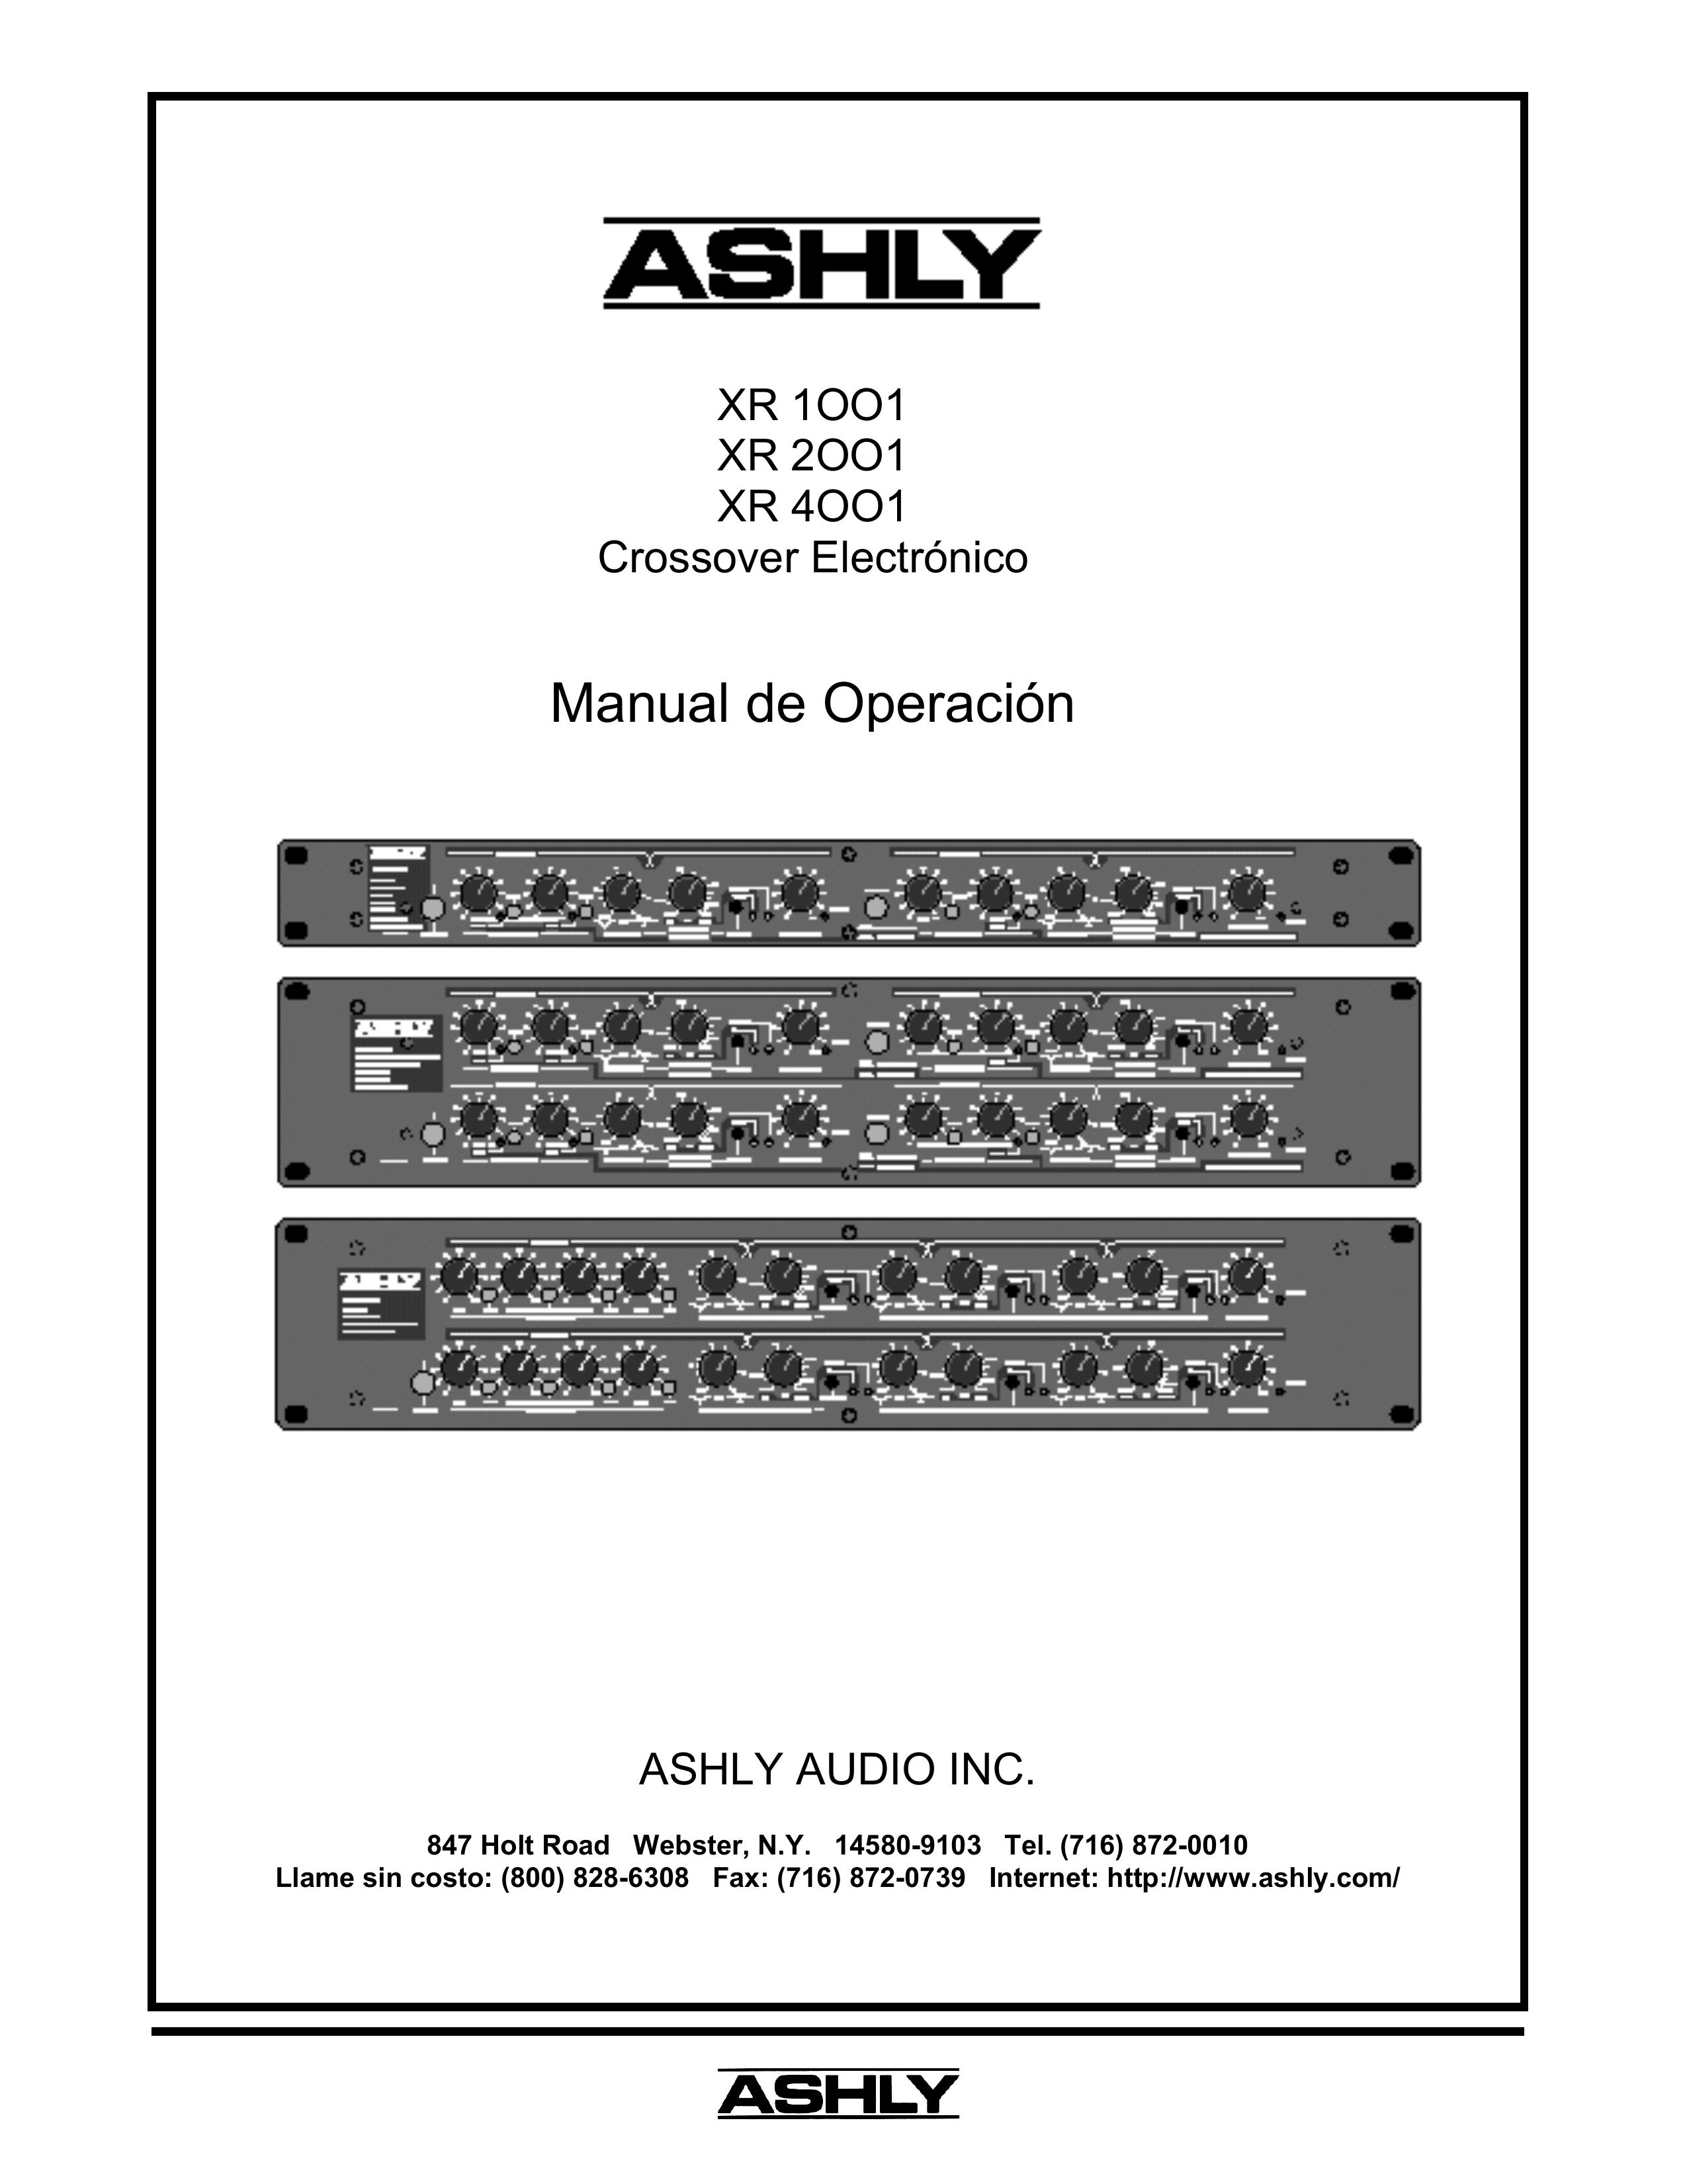 Ashly XR 1OO1 Music Mixer User Manual